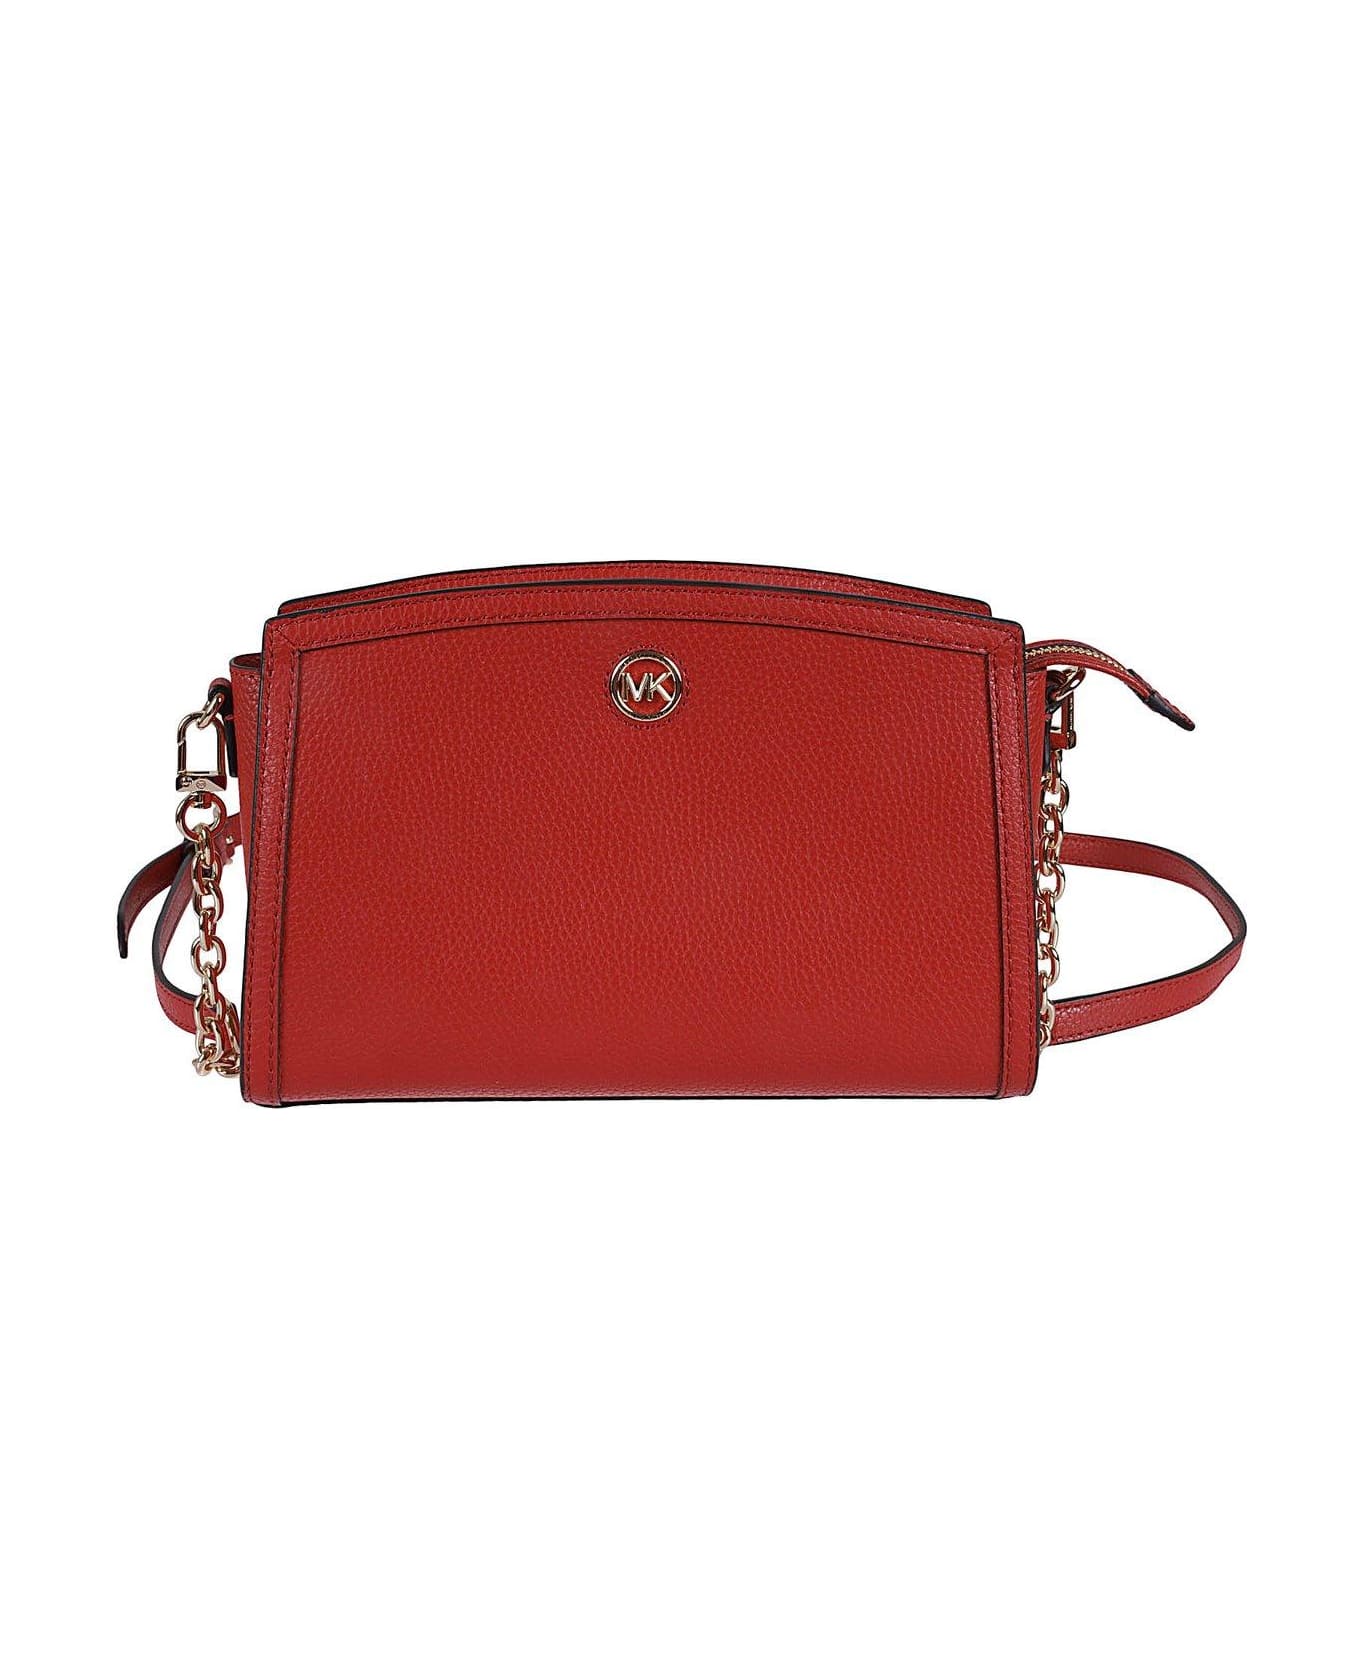 Michael Kors Chantal Shoulder Bag - red